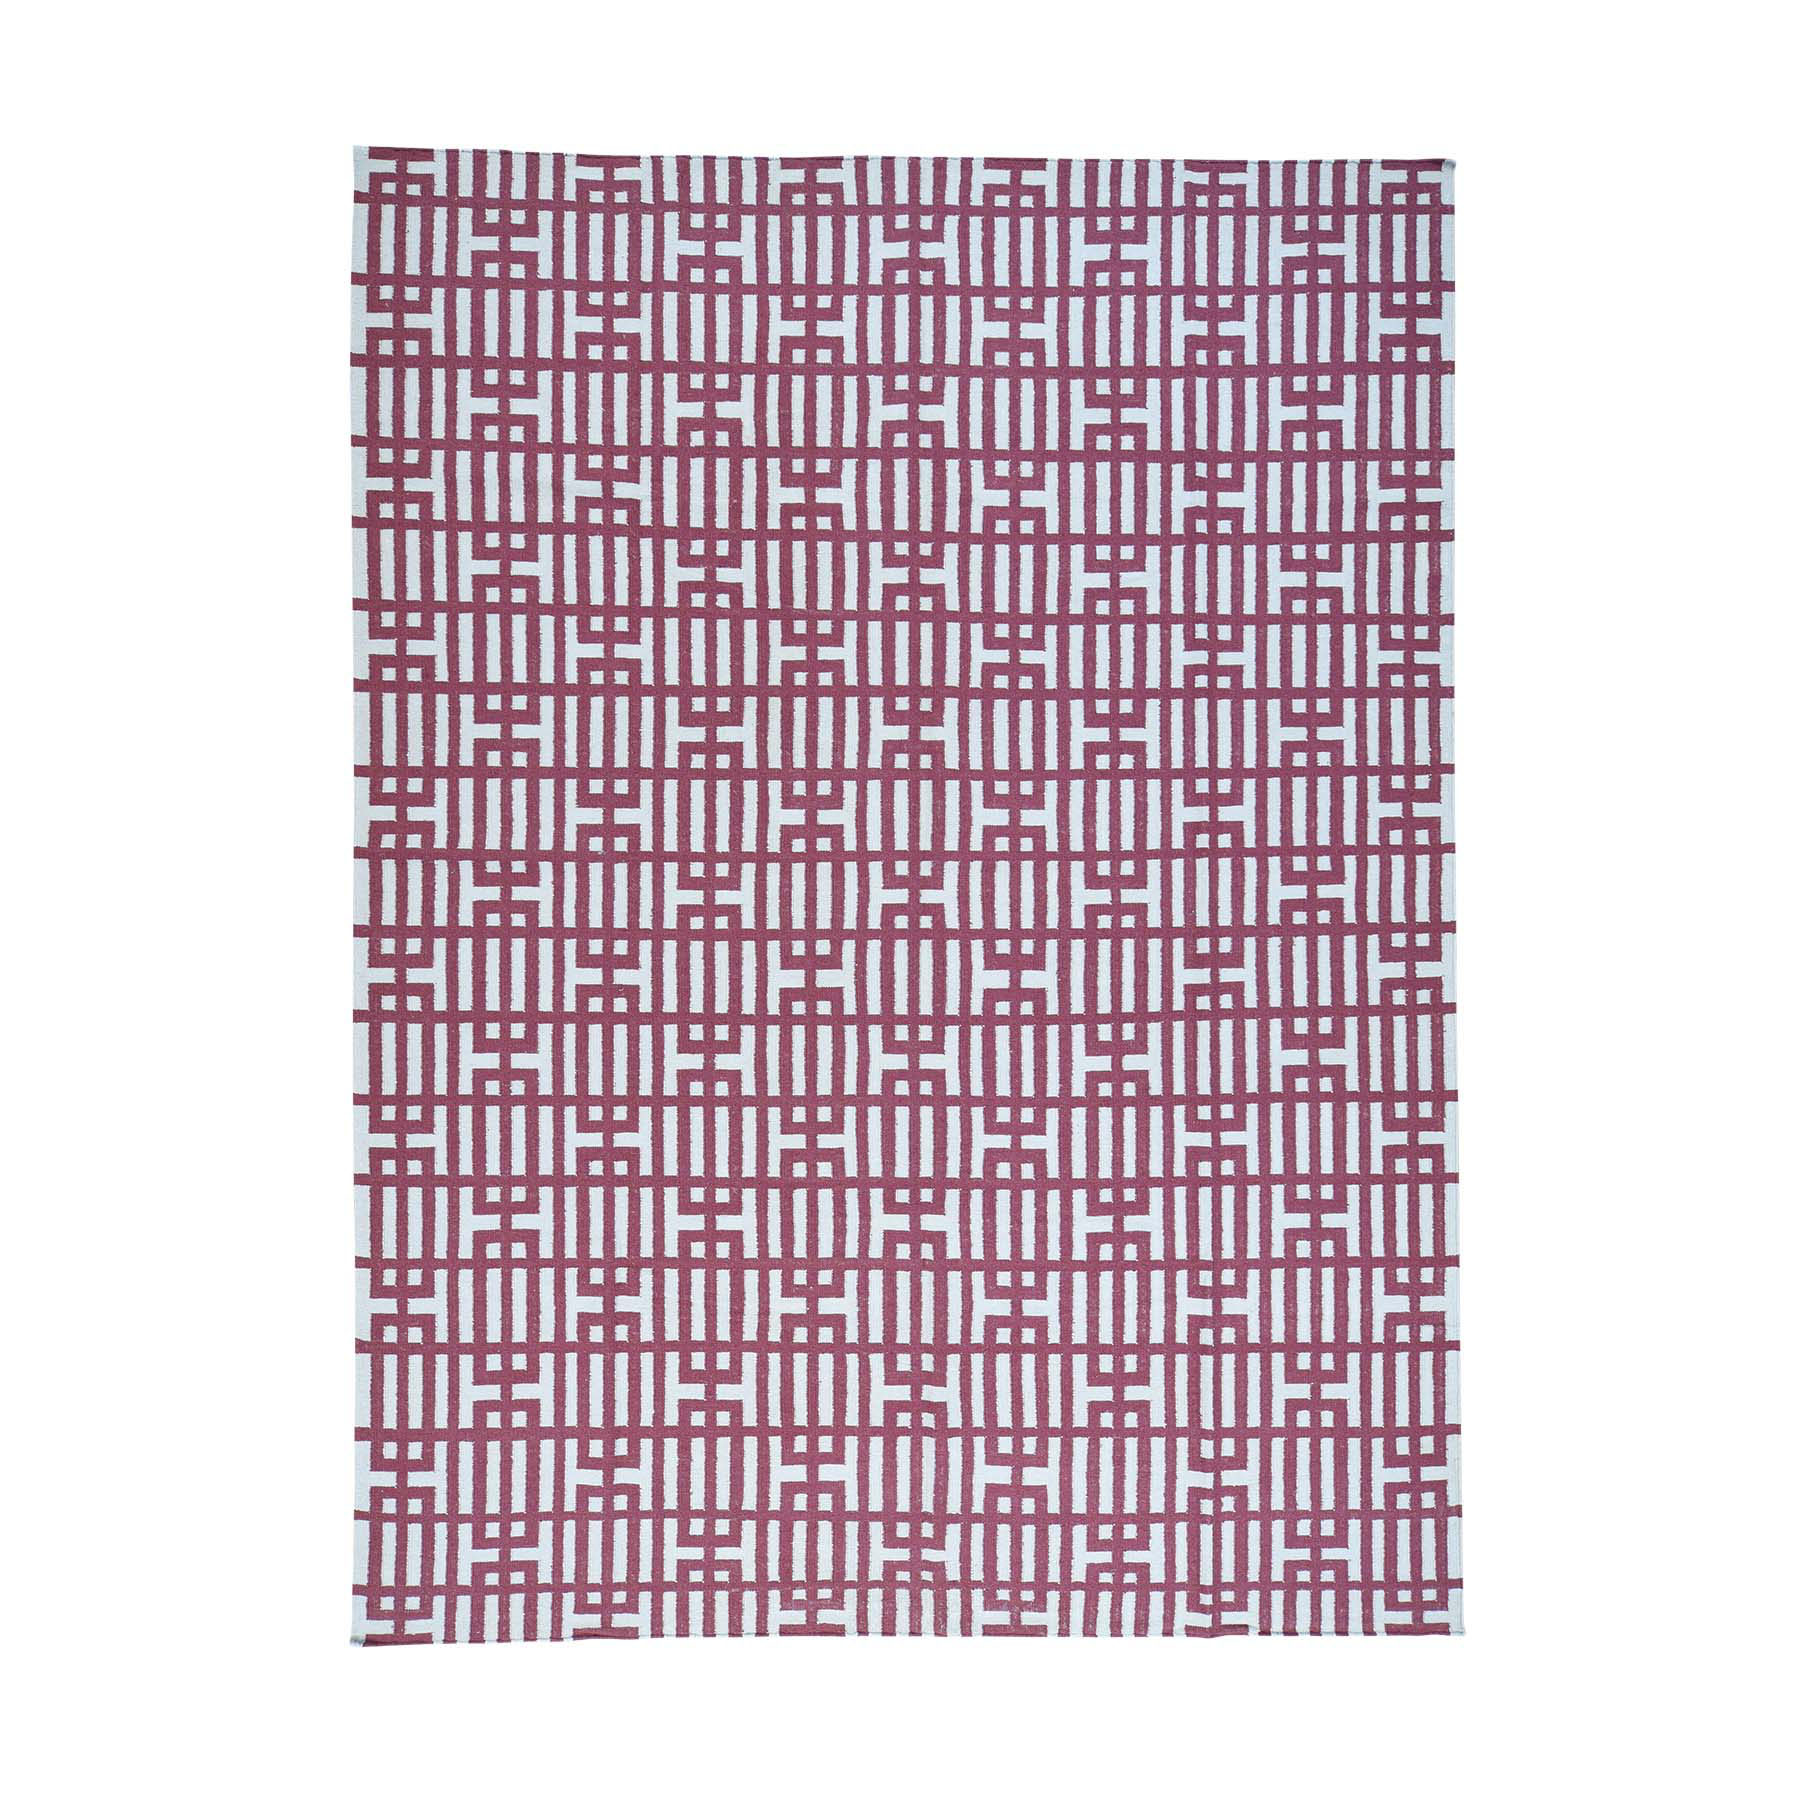 9'1"x12'2" Flat Weave Pure Wool Hand-Woven Reversible Kilim Oriental Rug 